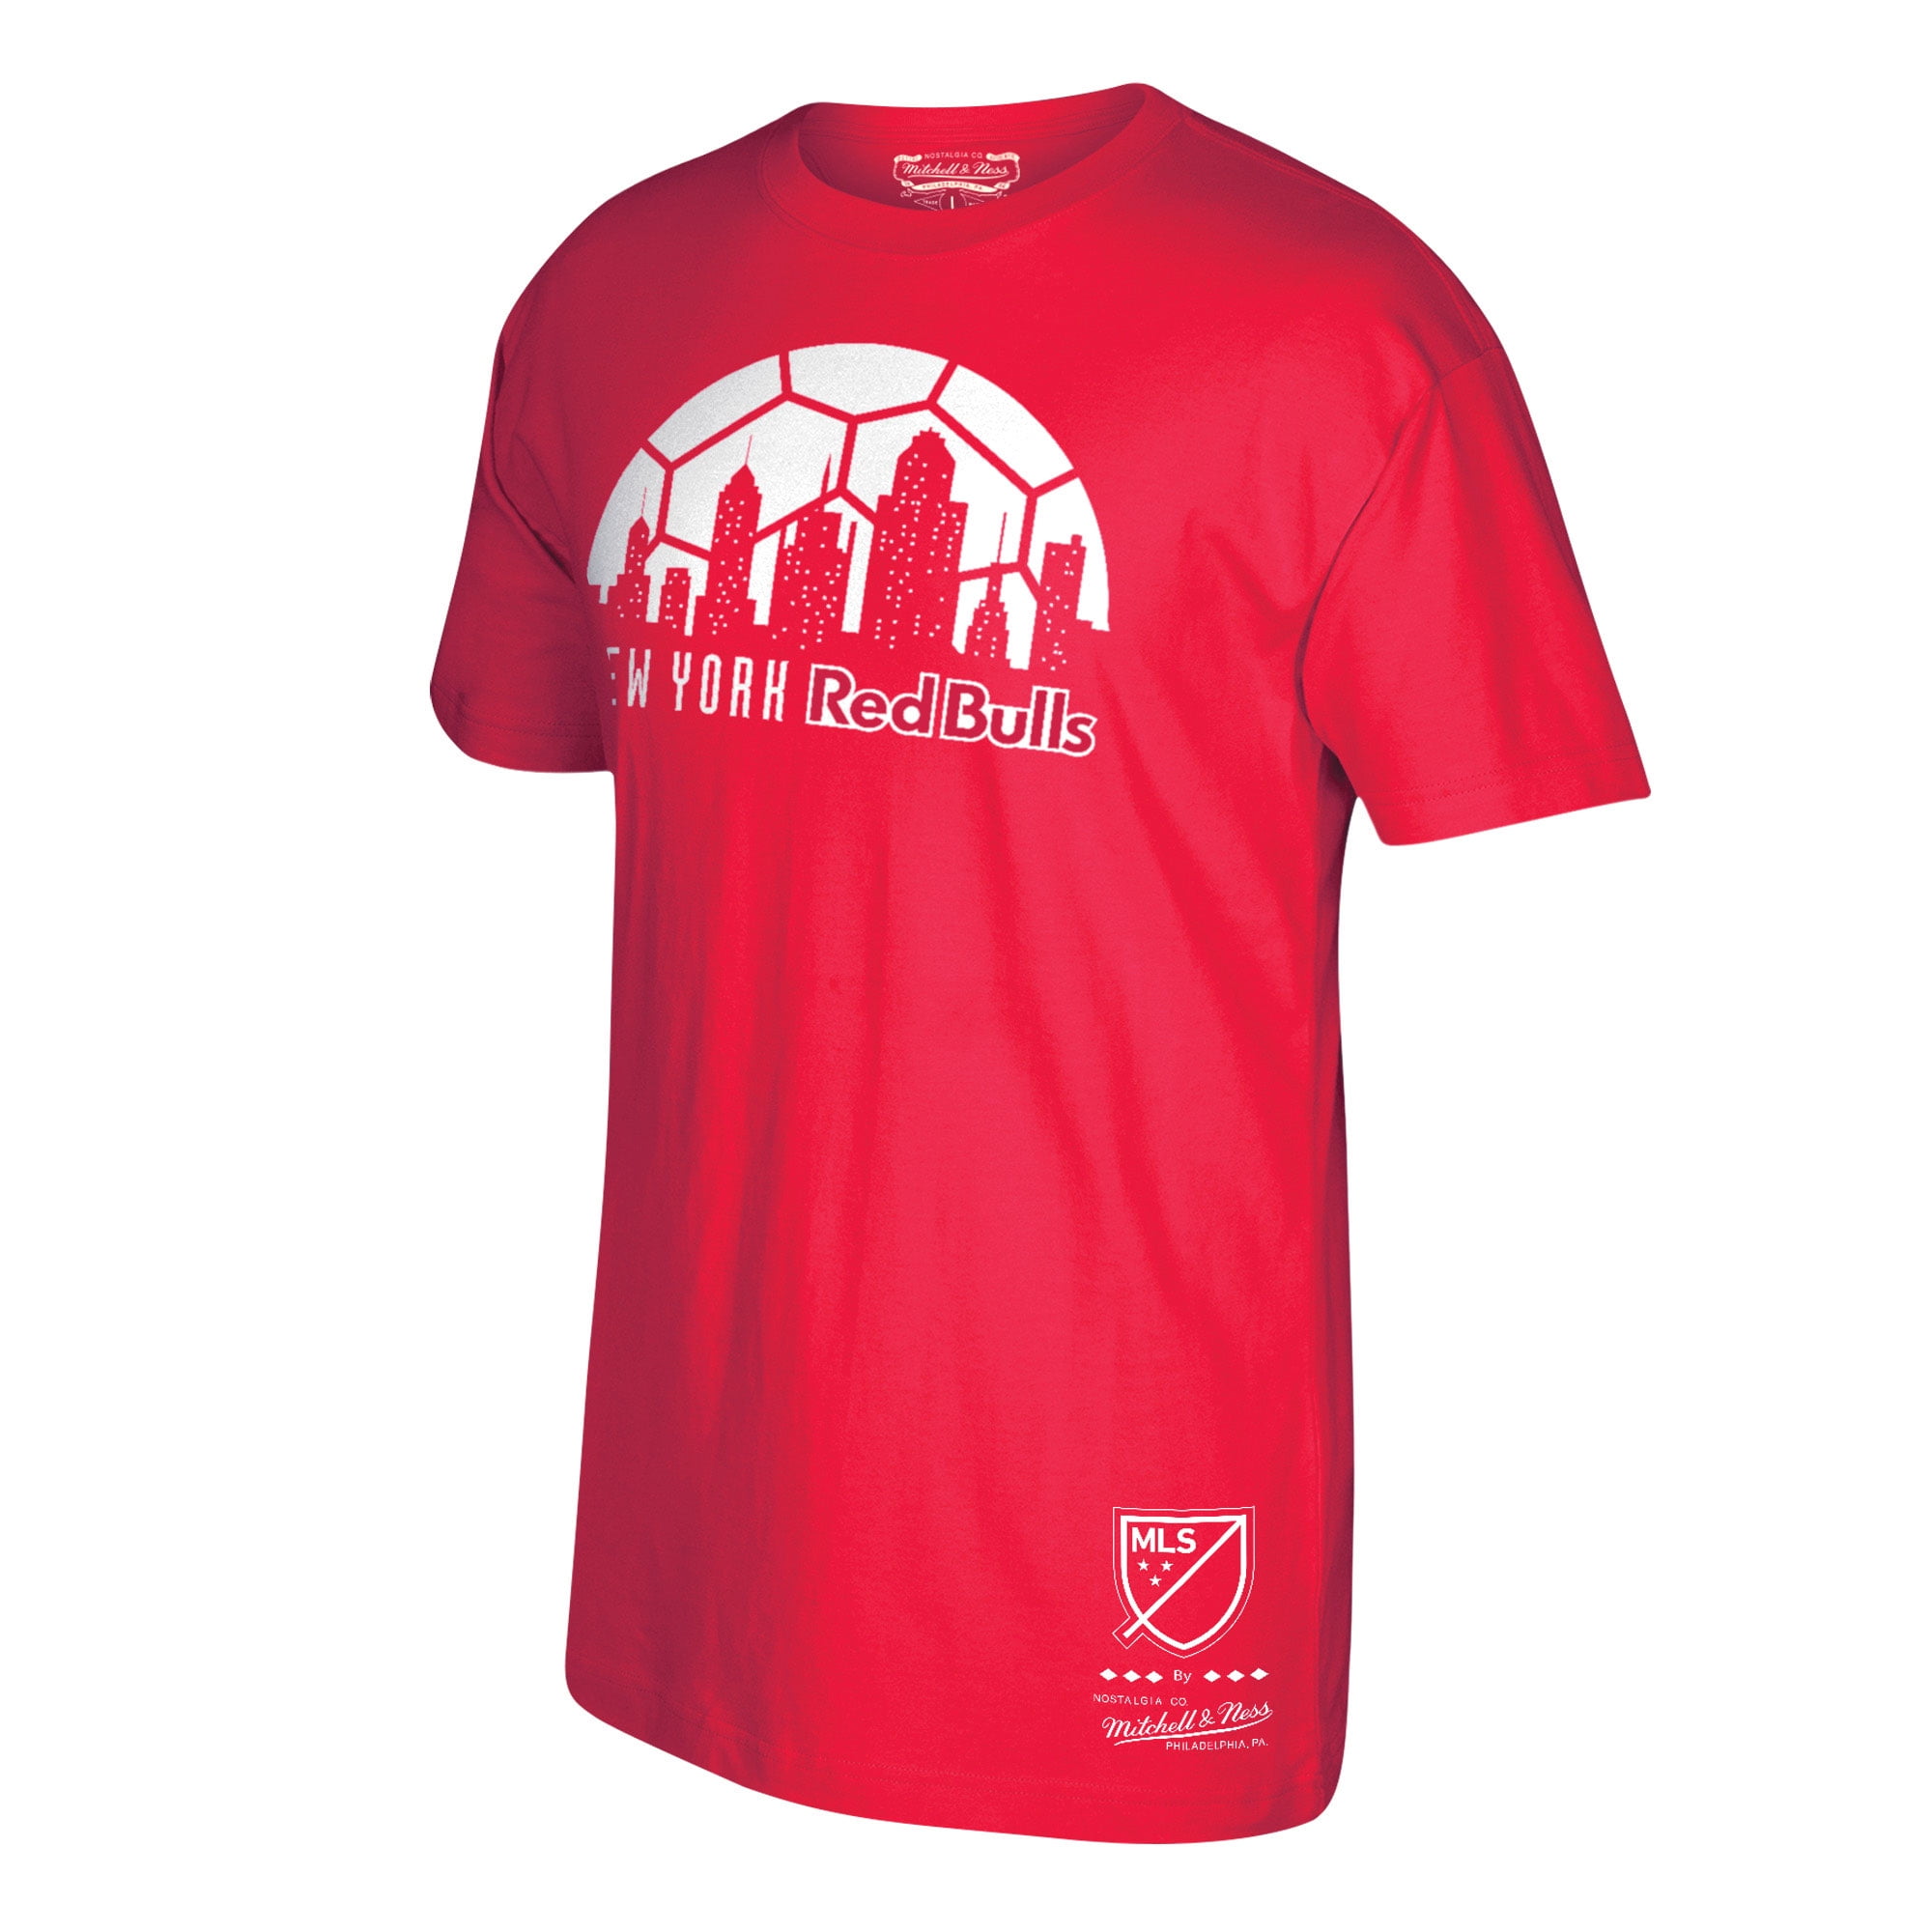 unisex shirt Soccer team t-shirt comfortable tees with New York Red Bul logo